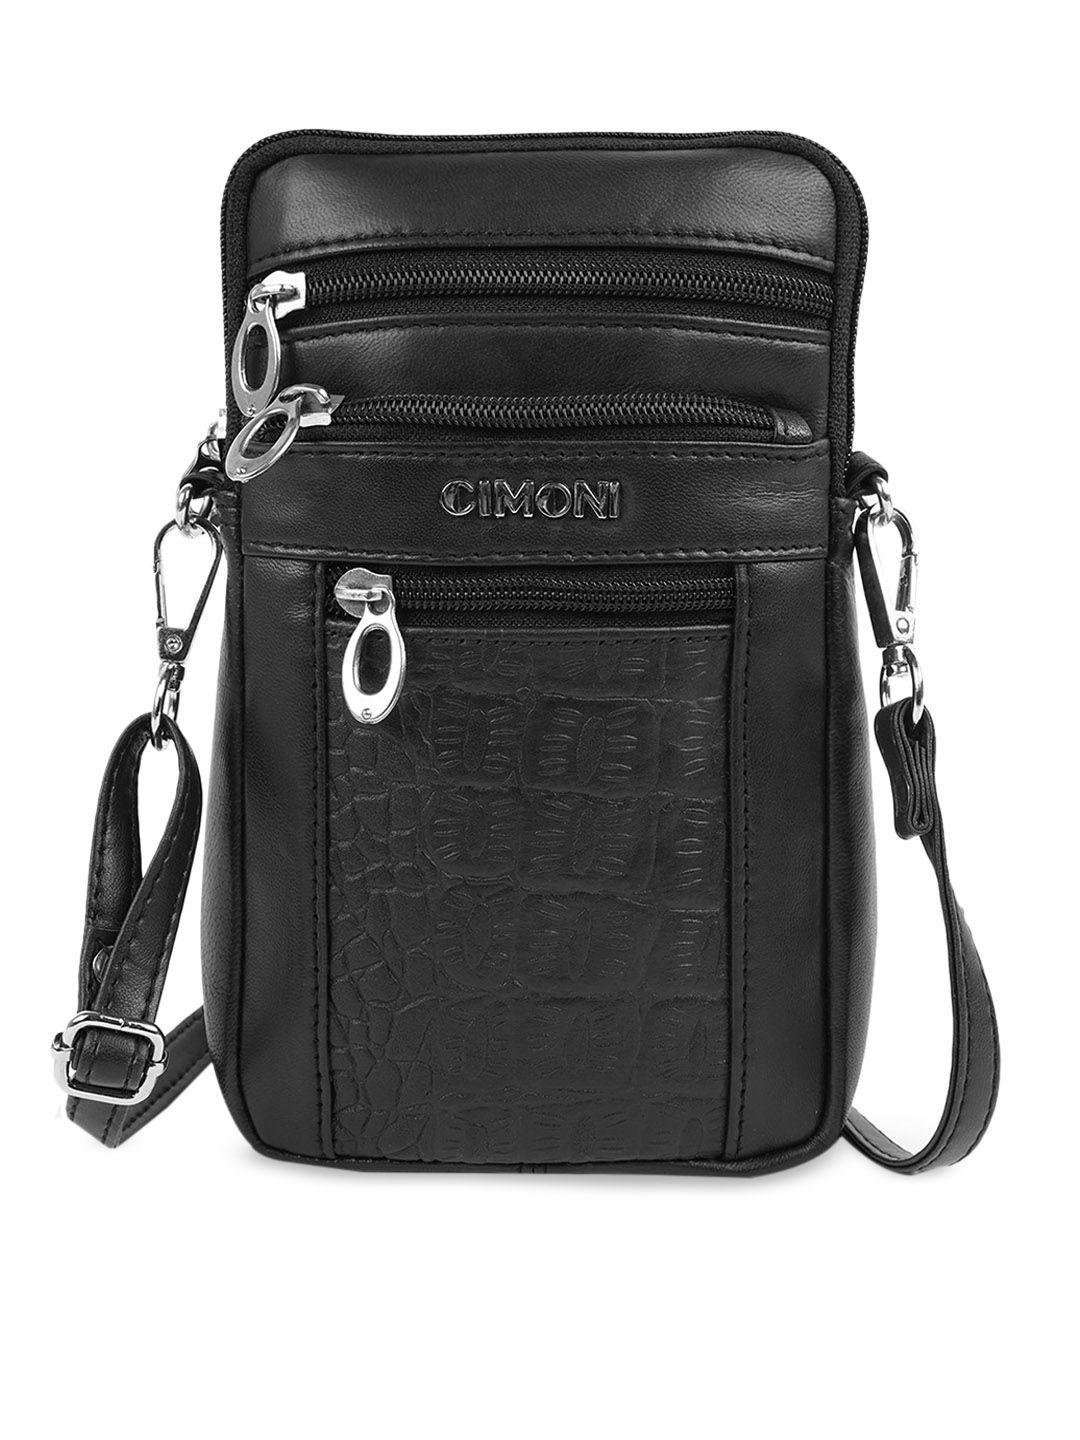 cimoni leather structured sling bag